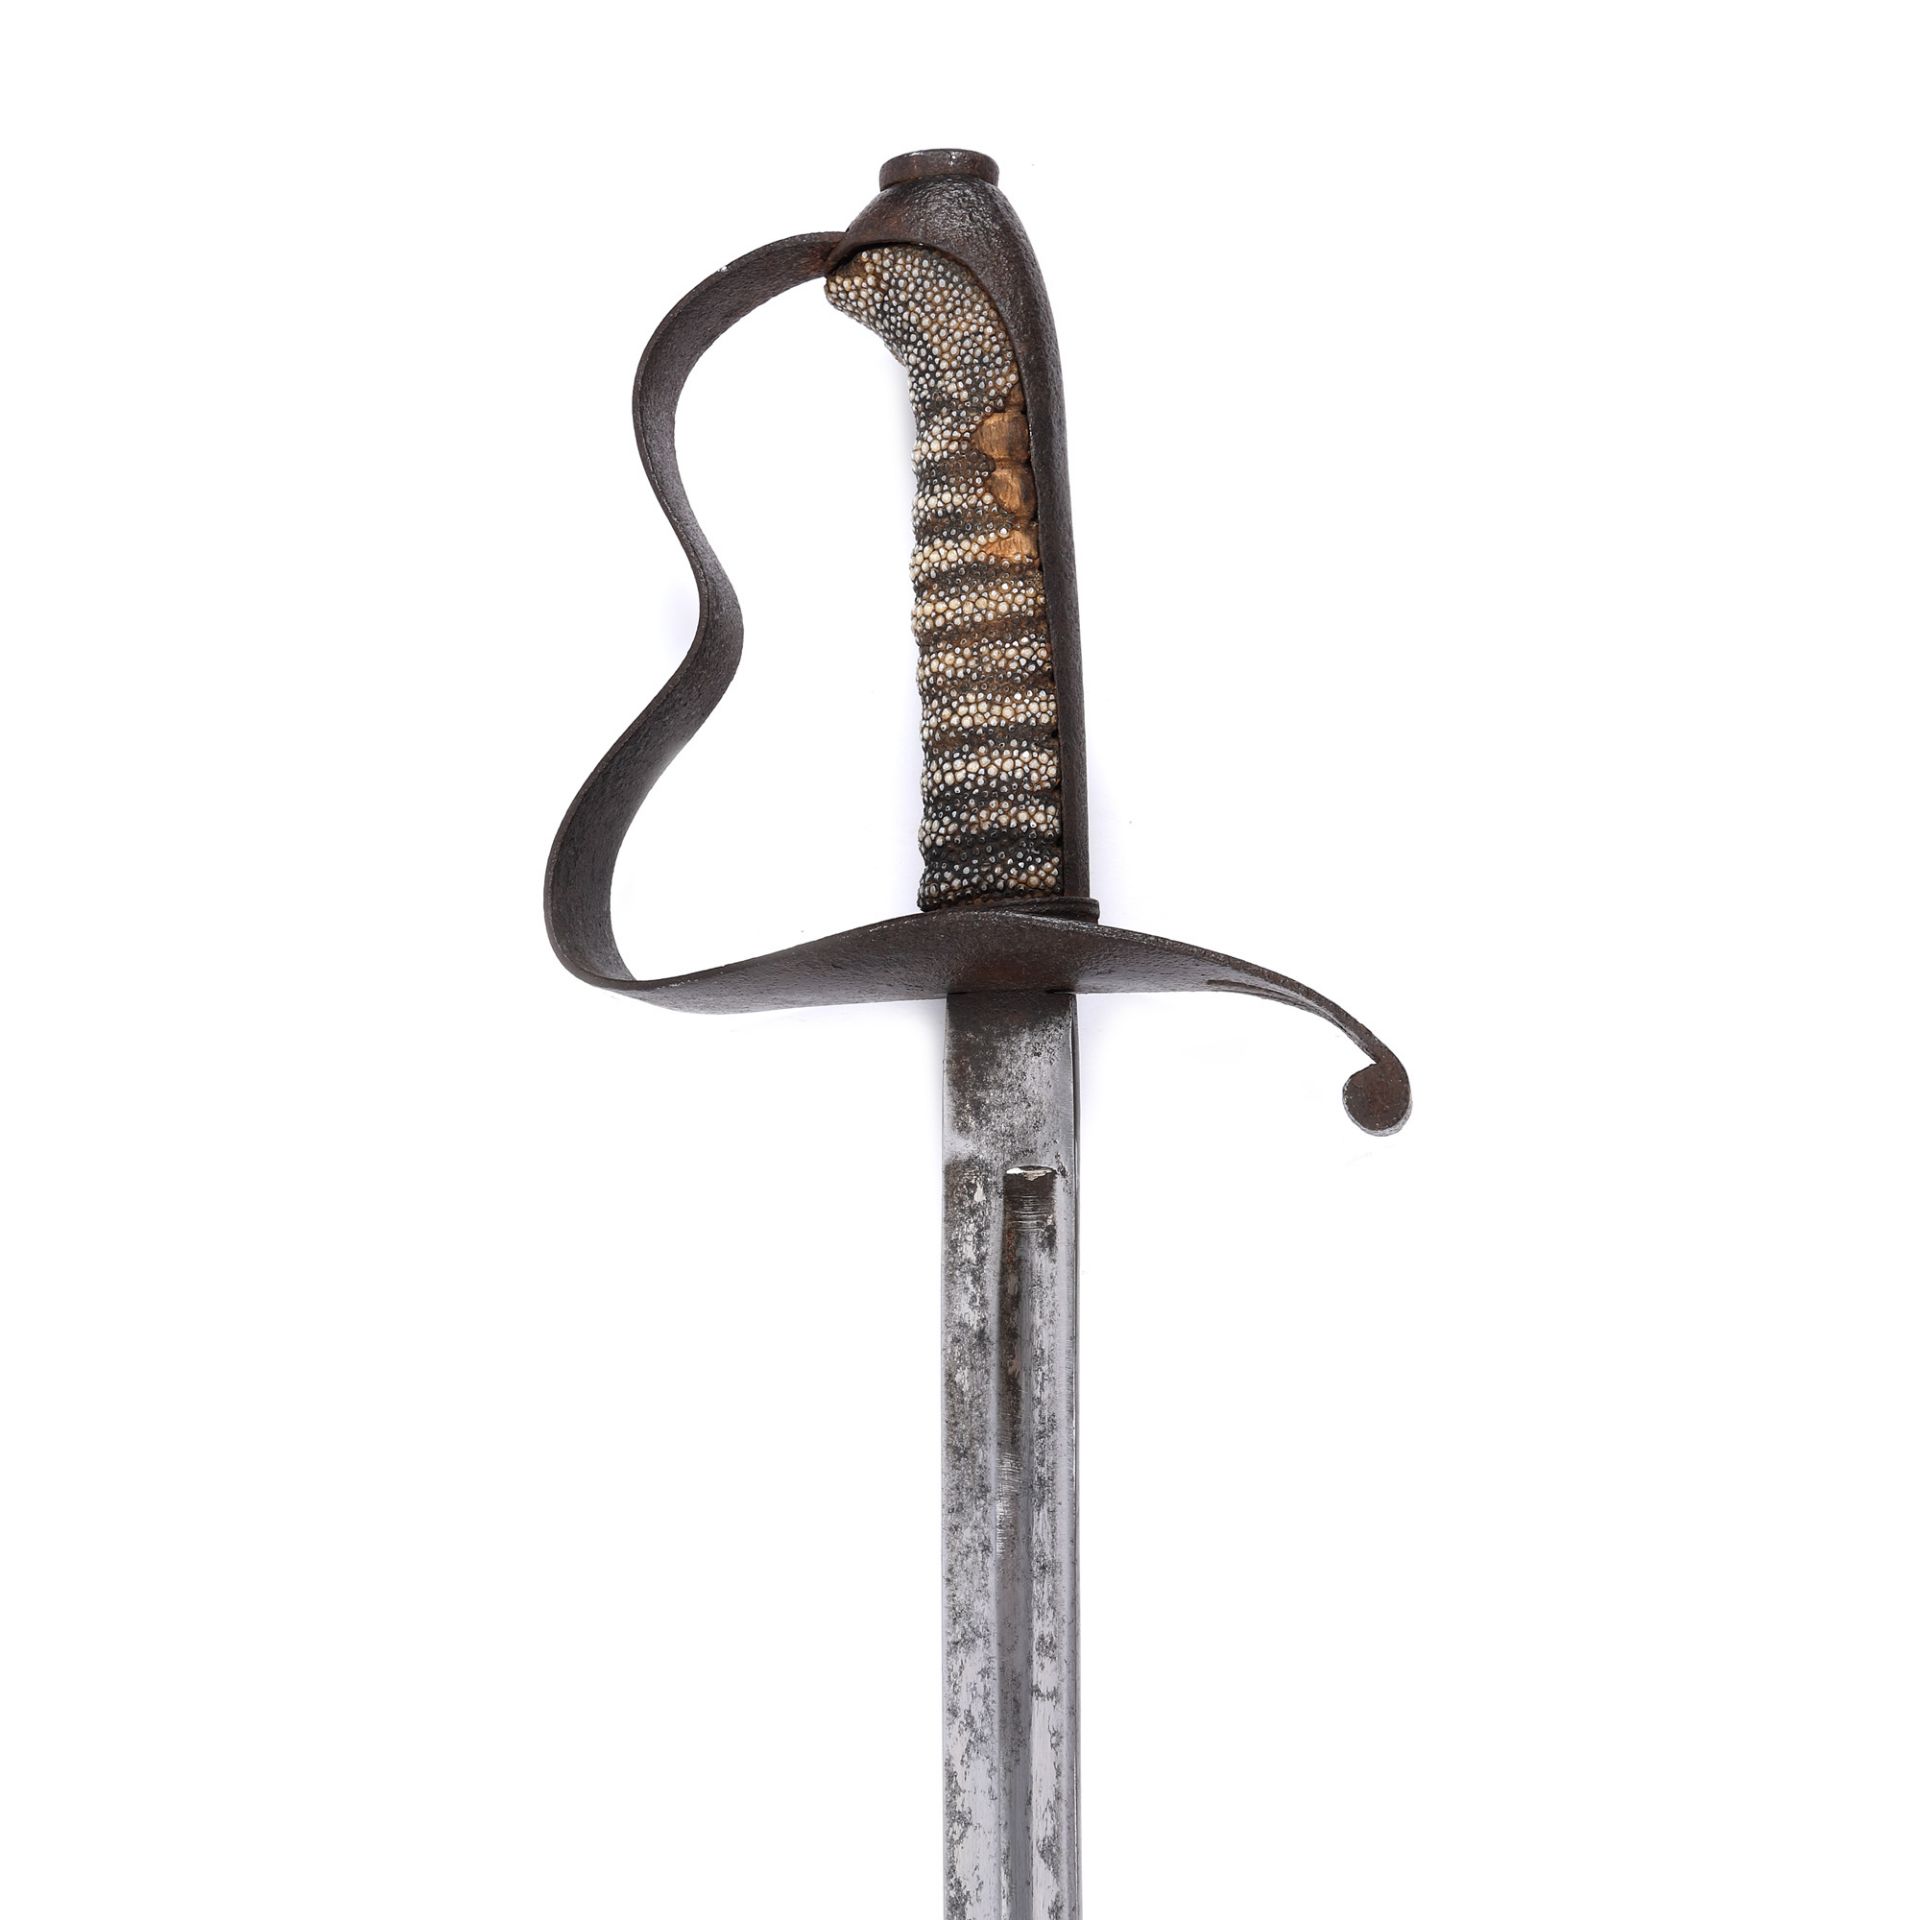 NCO sword, with sheath, Austria-Hungary, World War I period - Bild 3 aus 3